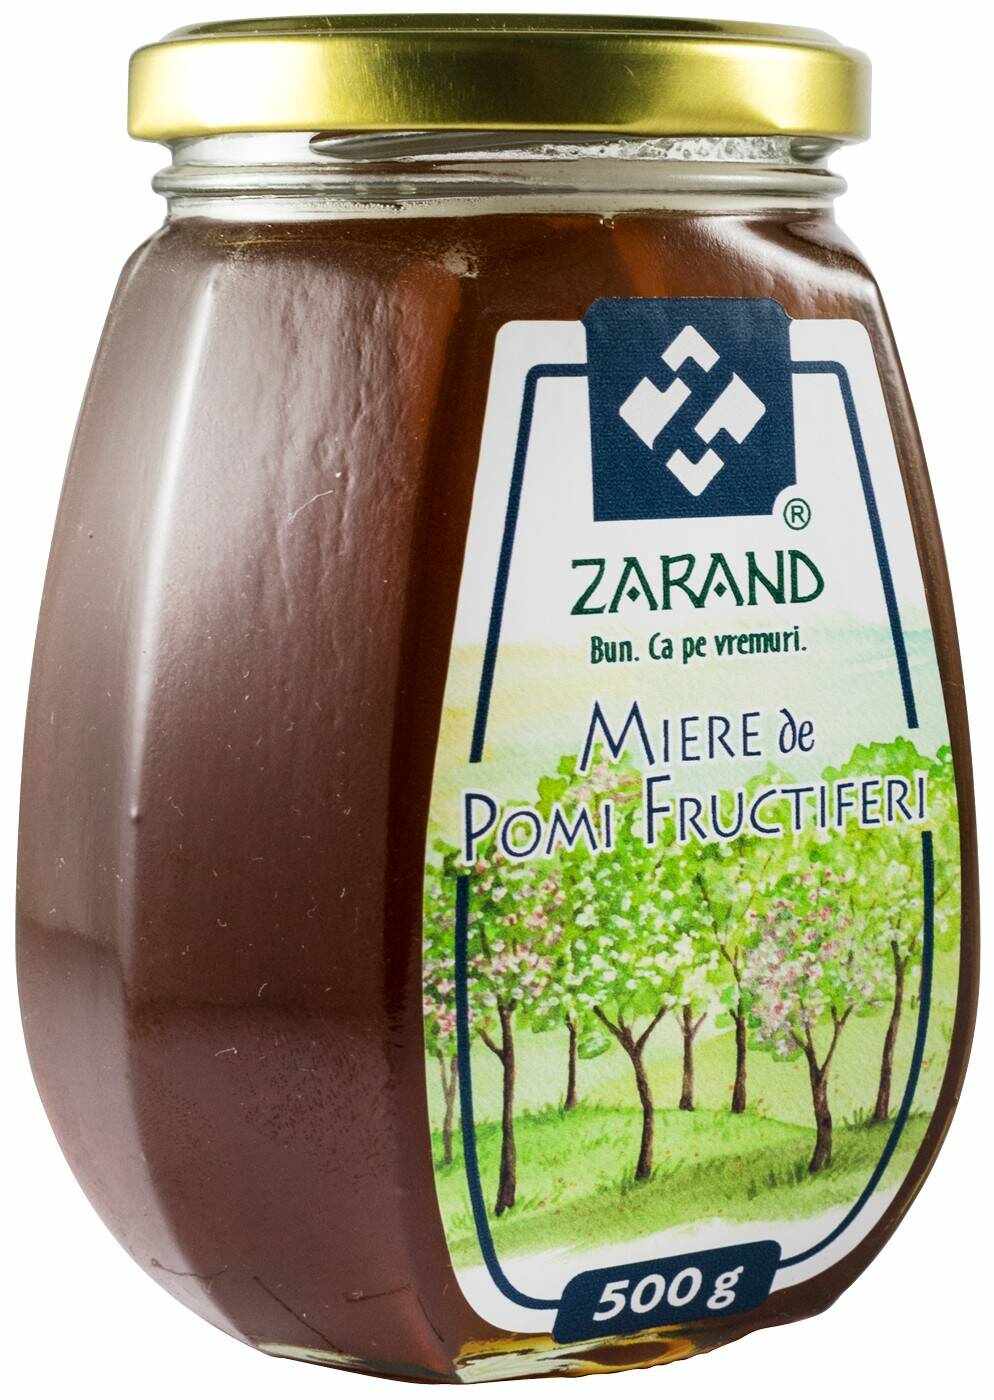 Miere de pomi fructiferi 500g - Zarand